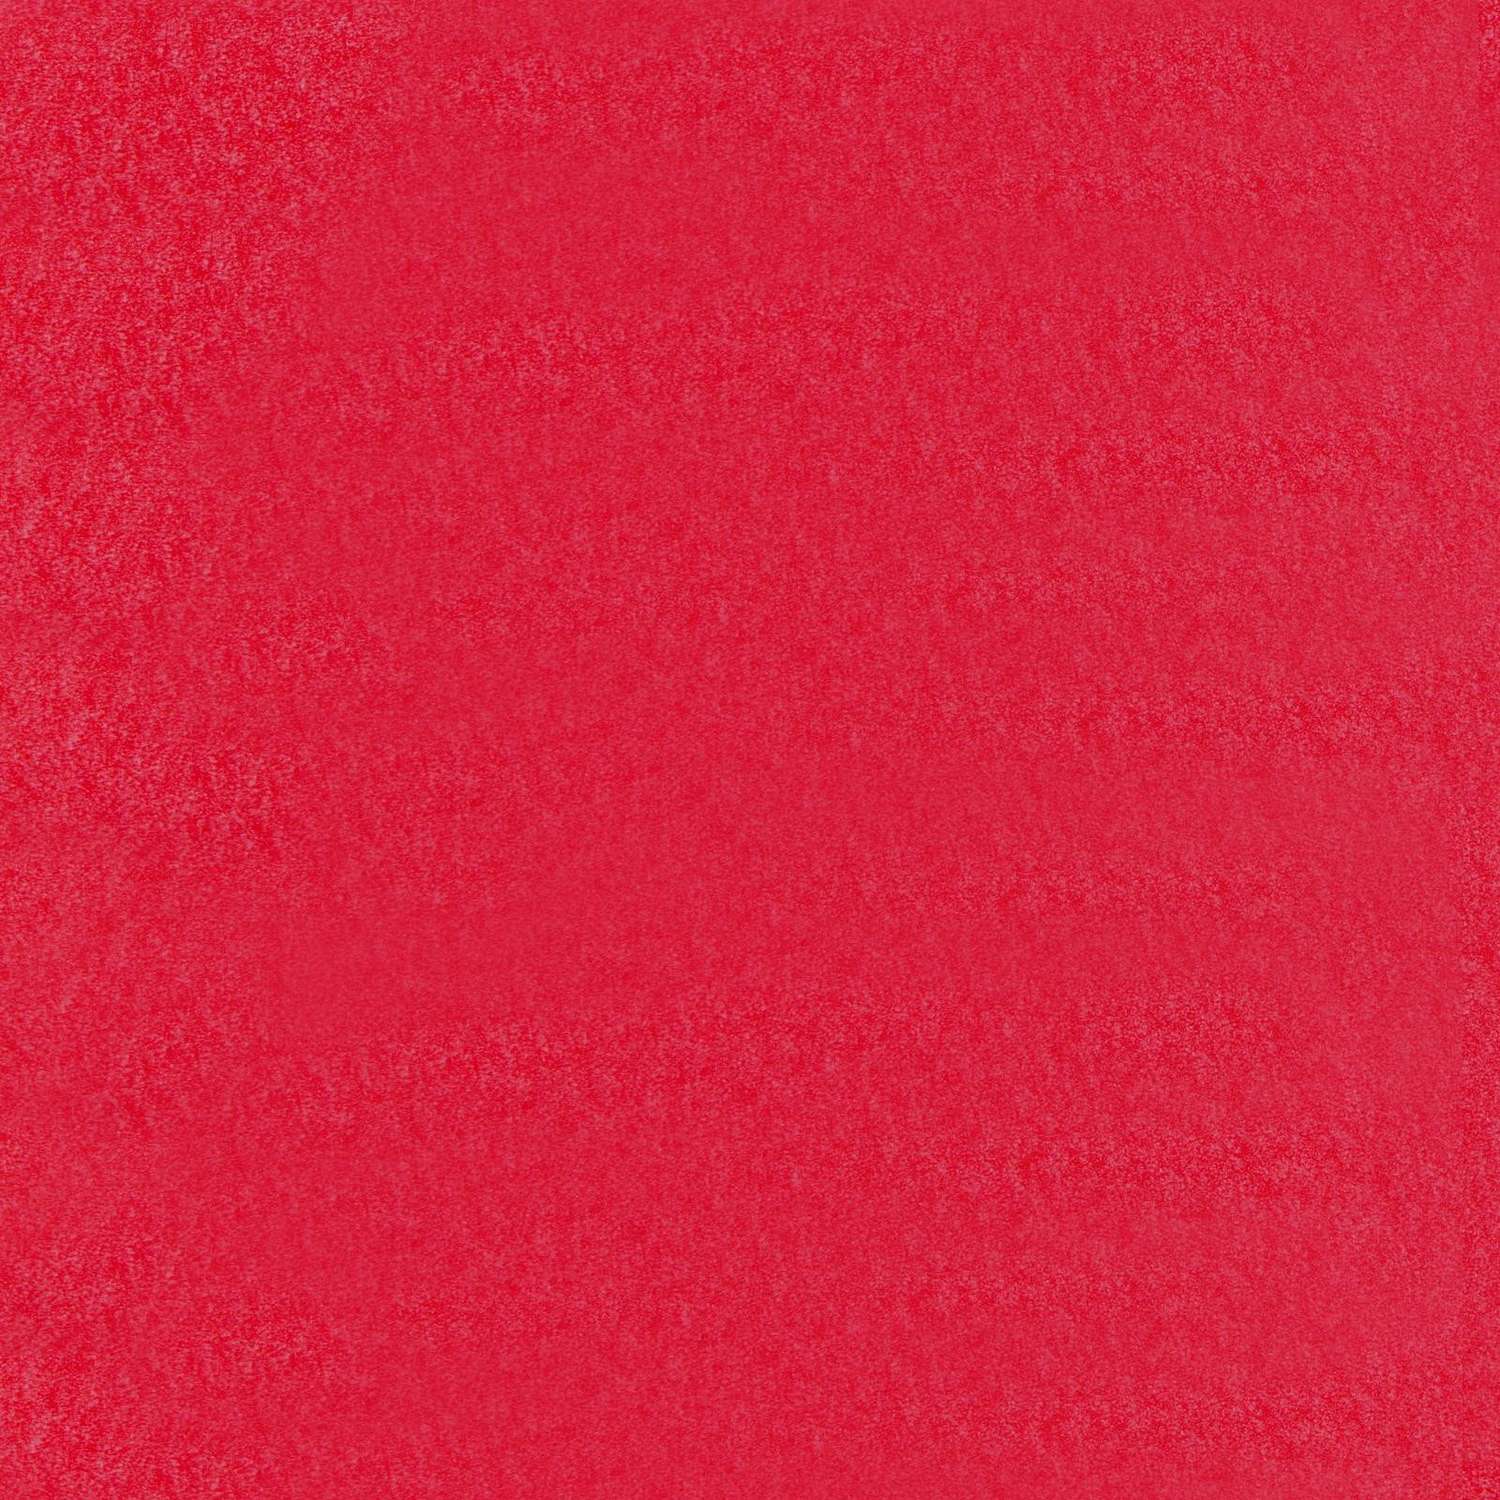 Бумага Sima-Land перламутровая бордовая 0 5 х 0 7 м 2 листа - фото 5